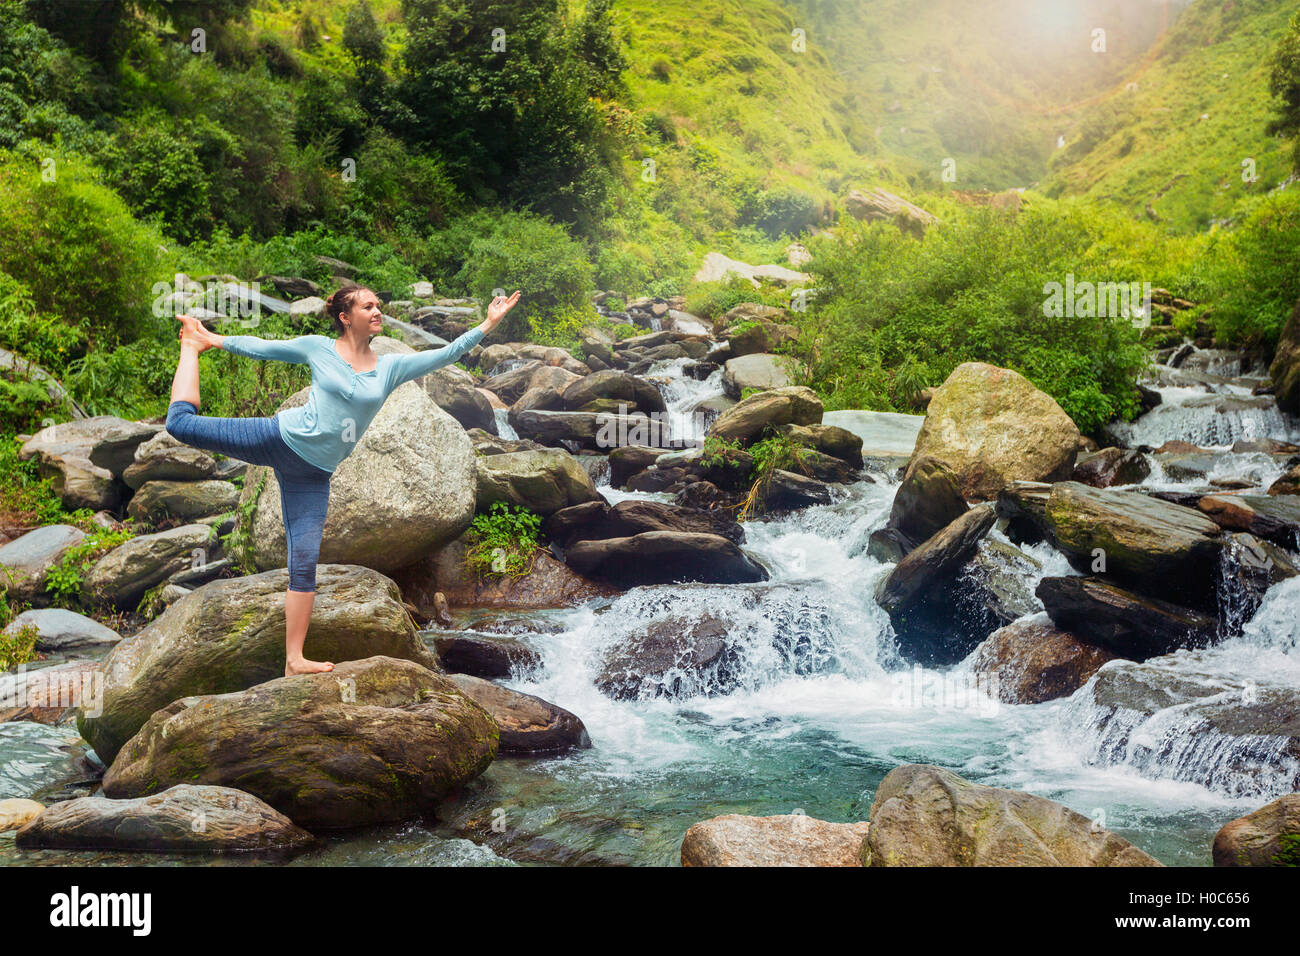 Woman doing yoga asana Natarajasana outdoors at waterfall Stock Photo